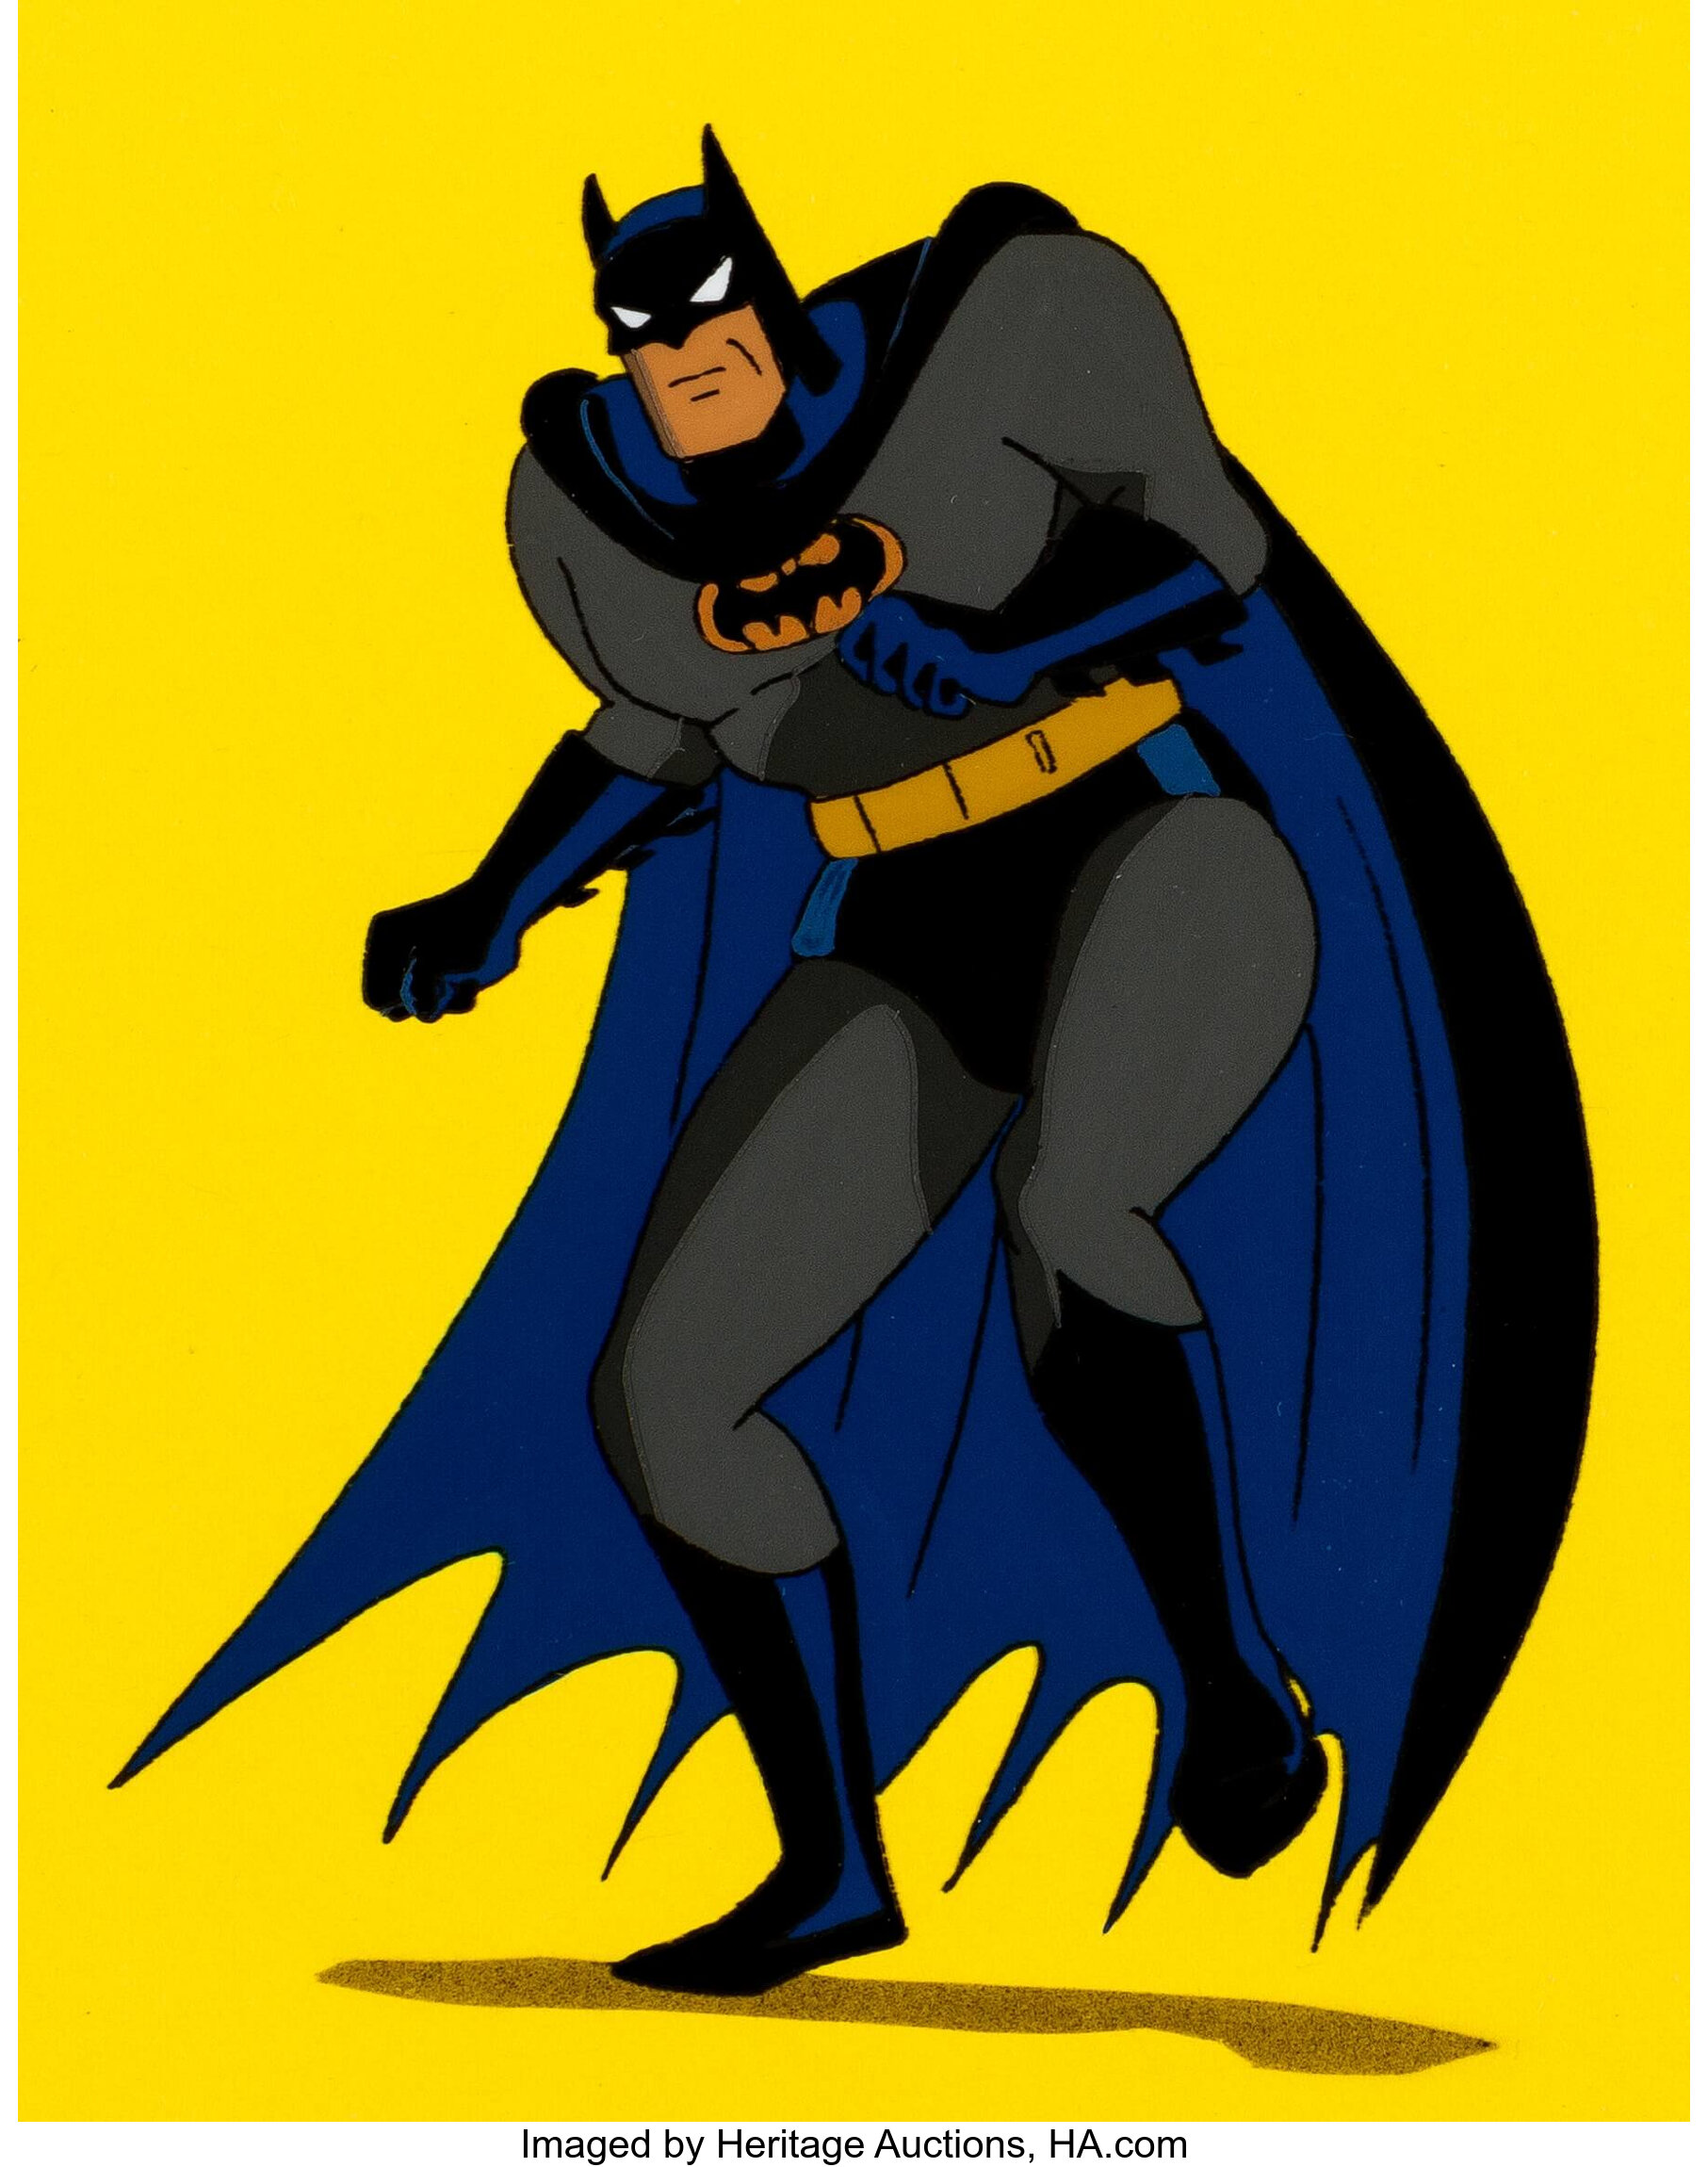 Batman: The Animated Series/The New Batman/Superman Adventures | Lot #12178  | Heritage Auctions